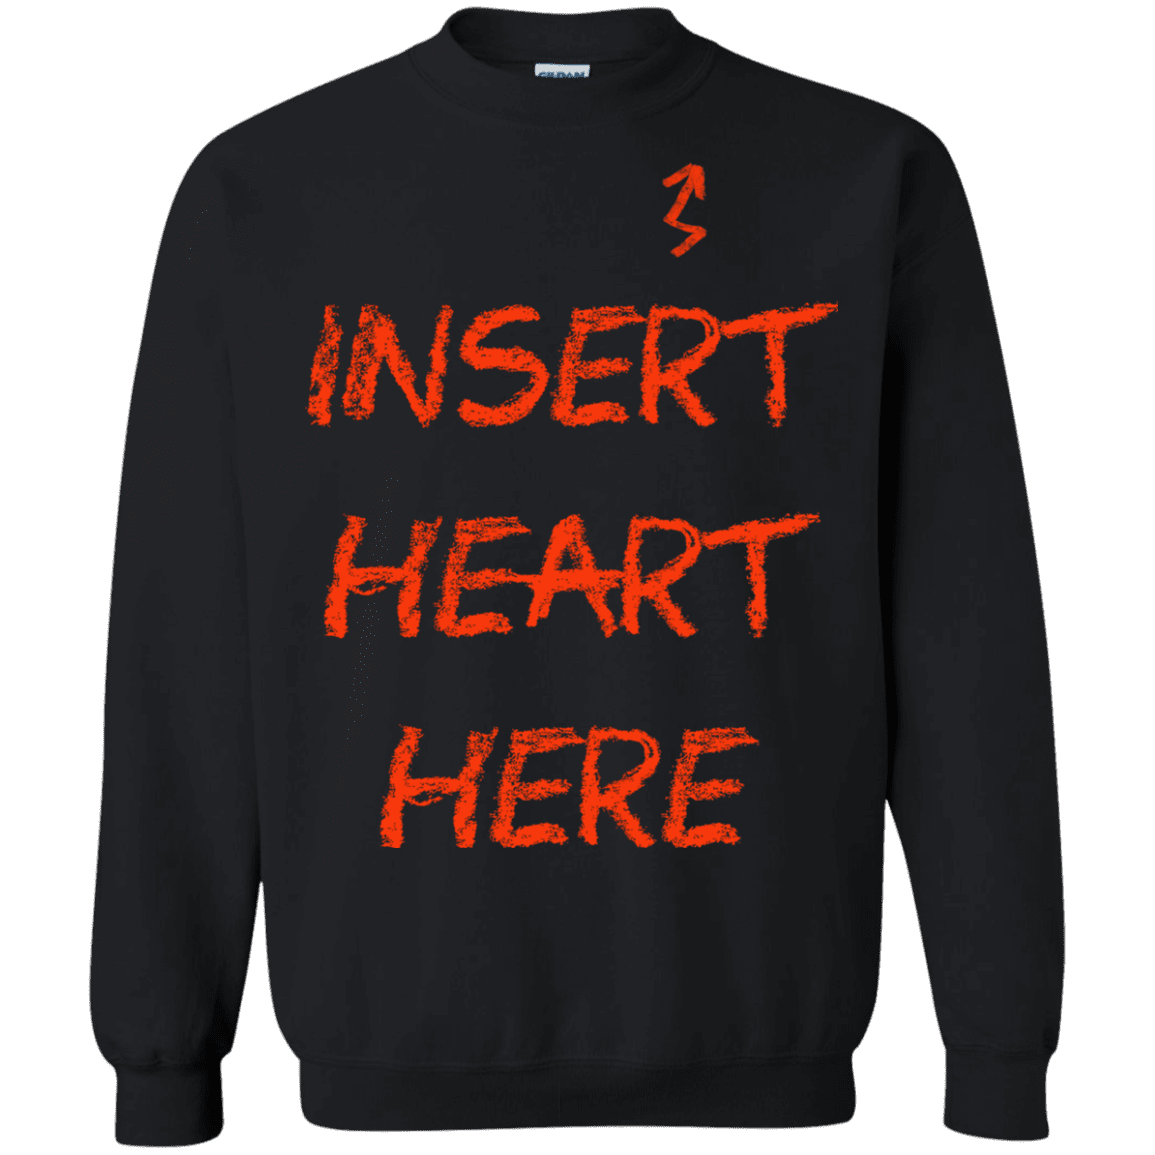 Sweatshirts Black / S Insert Heart Here Crewneck Sweatshirt